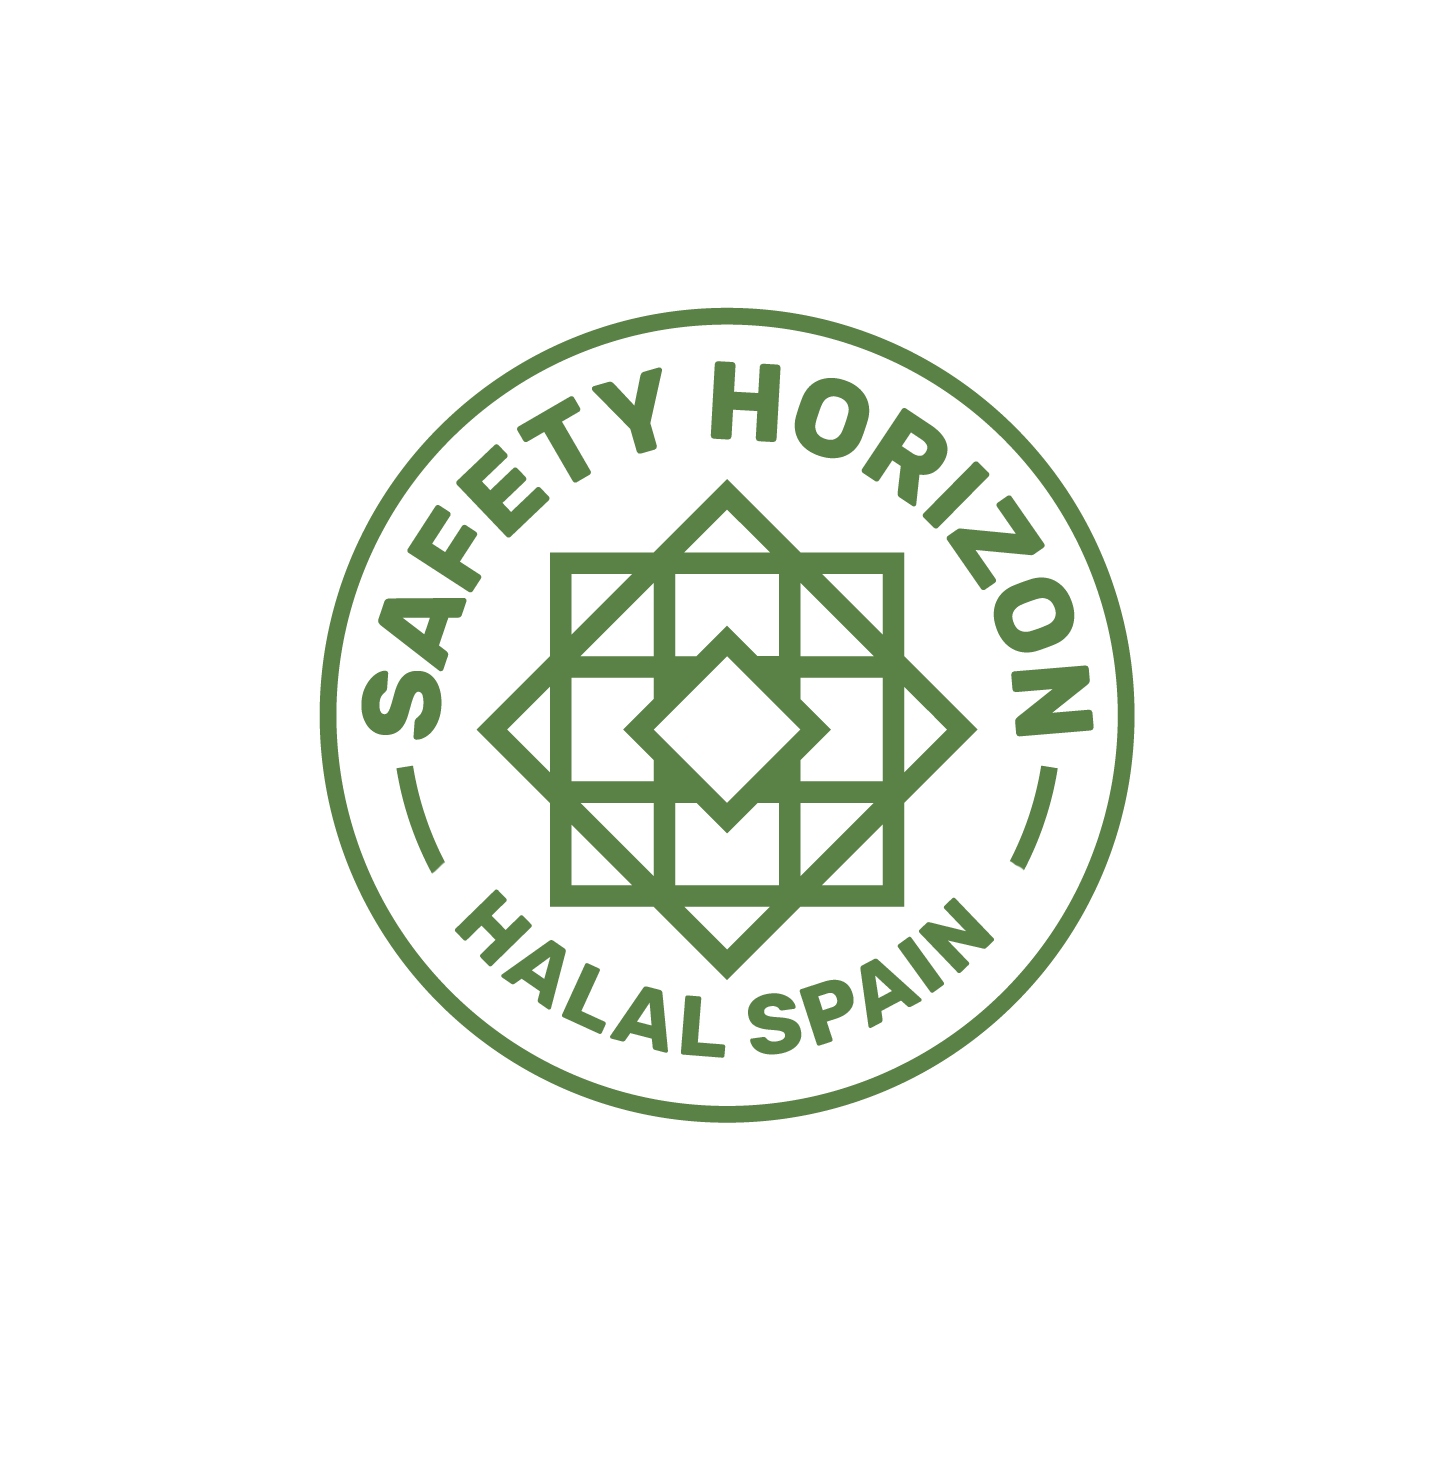 Safety Horizon